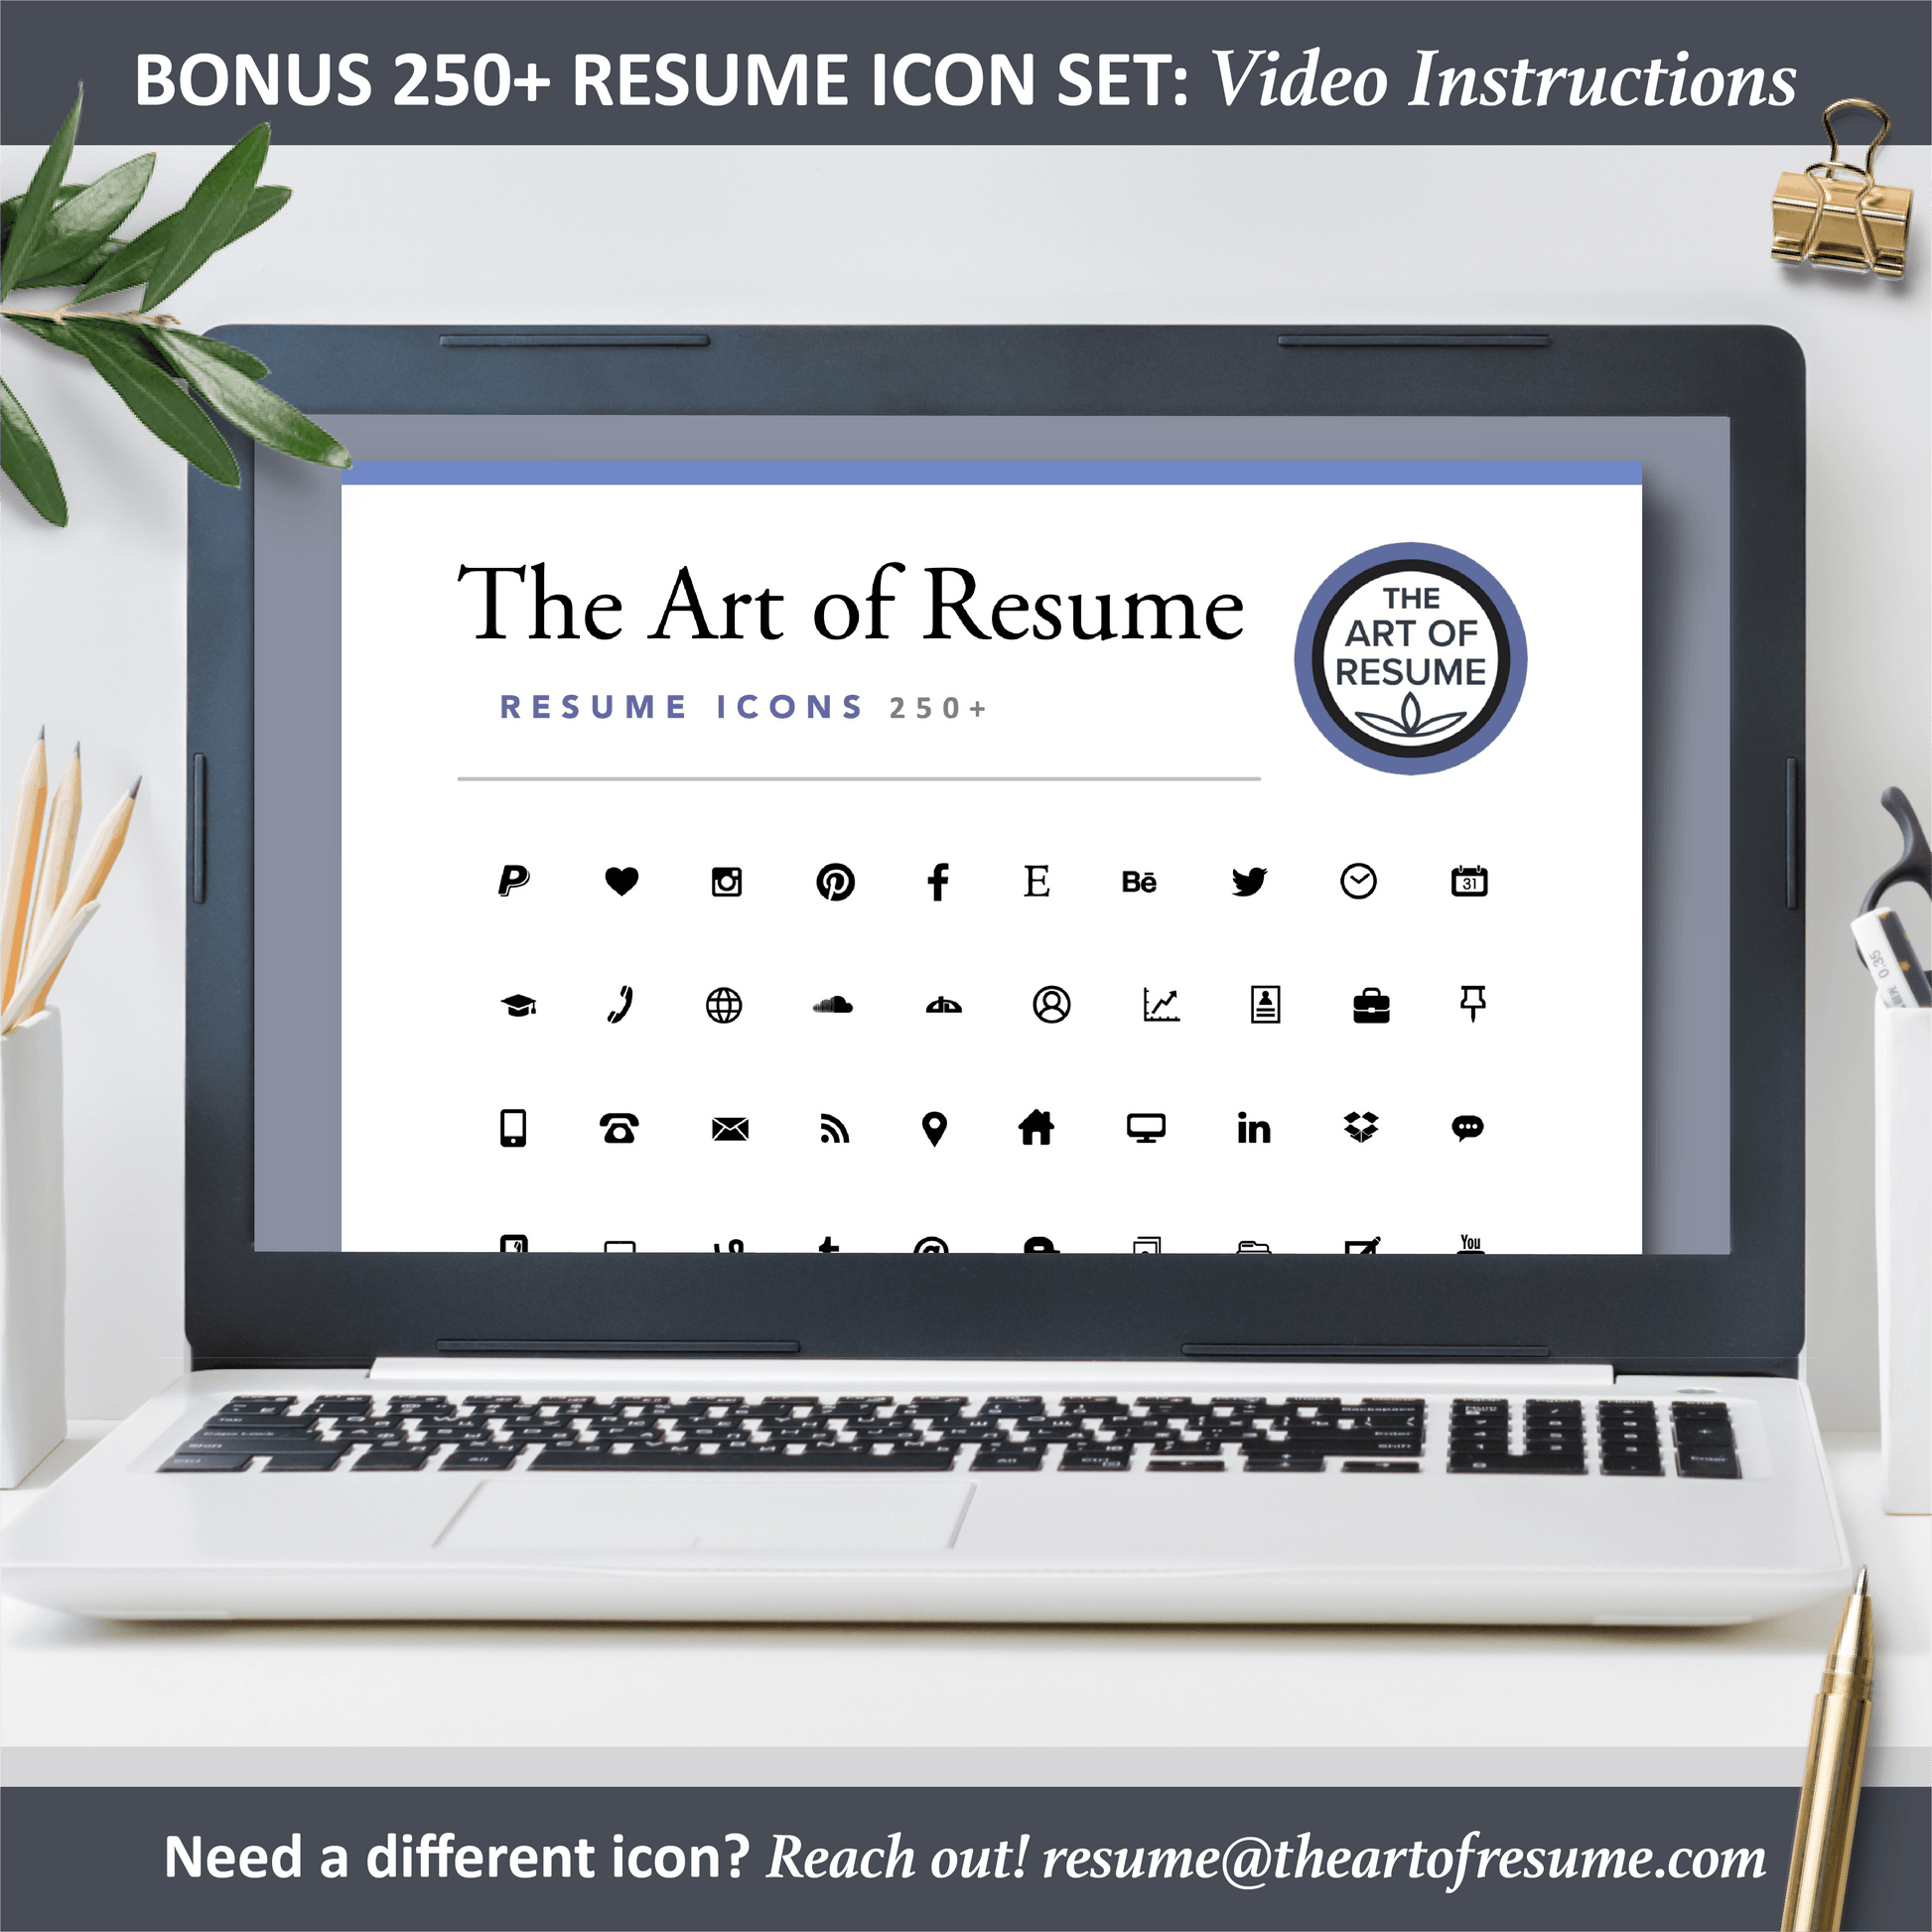 Professional Resume Bundle | ATS-Friendly Resume CV Format - The Art of Resume